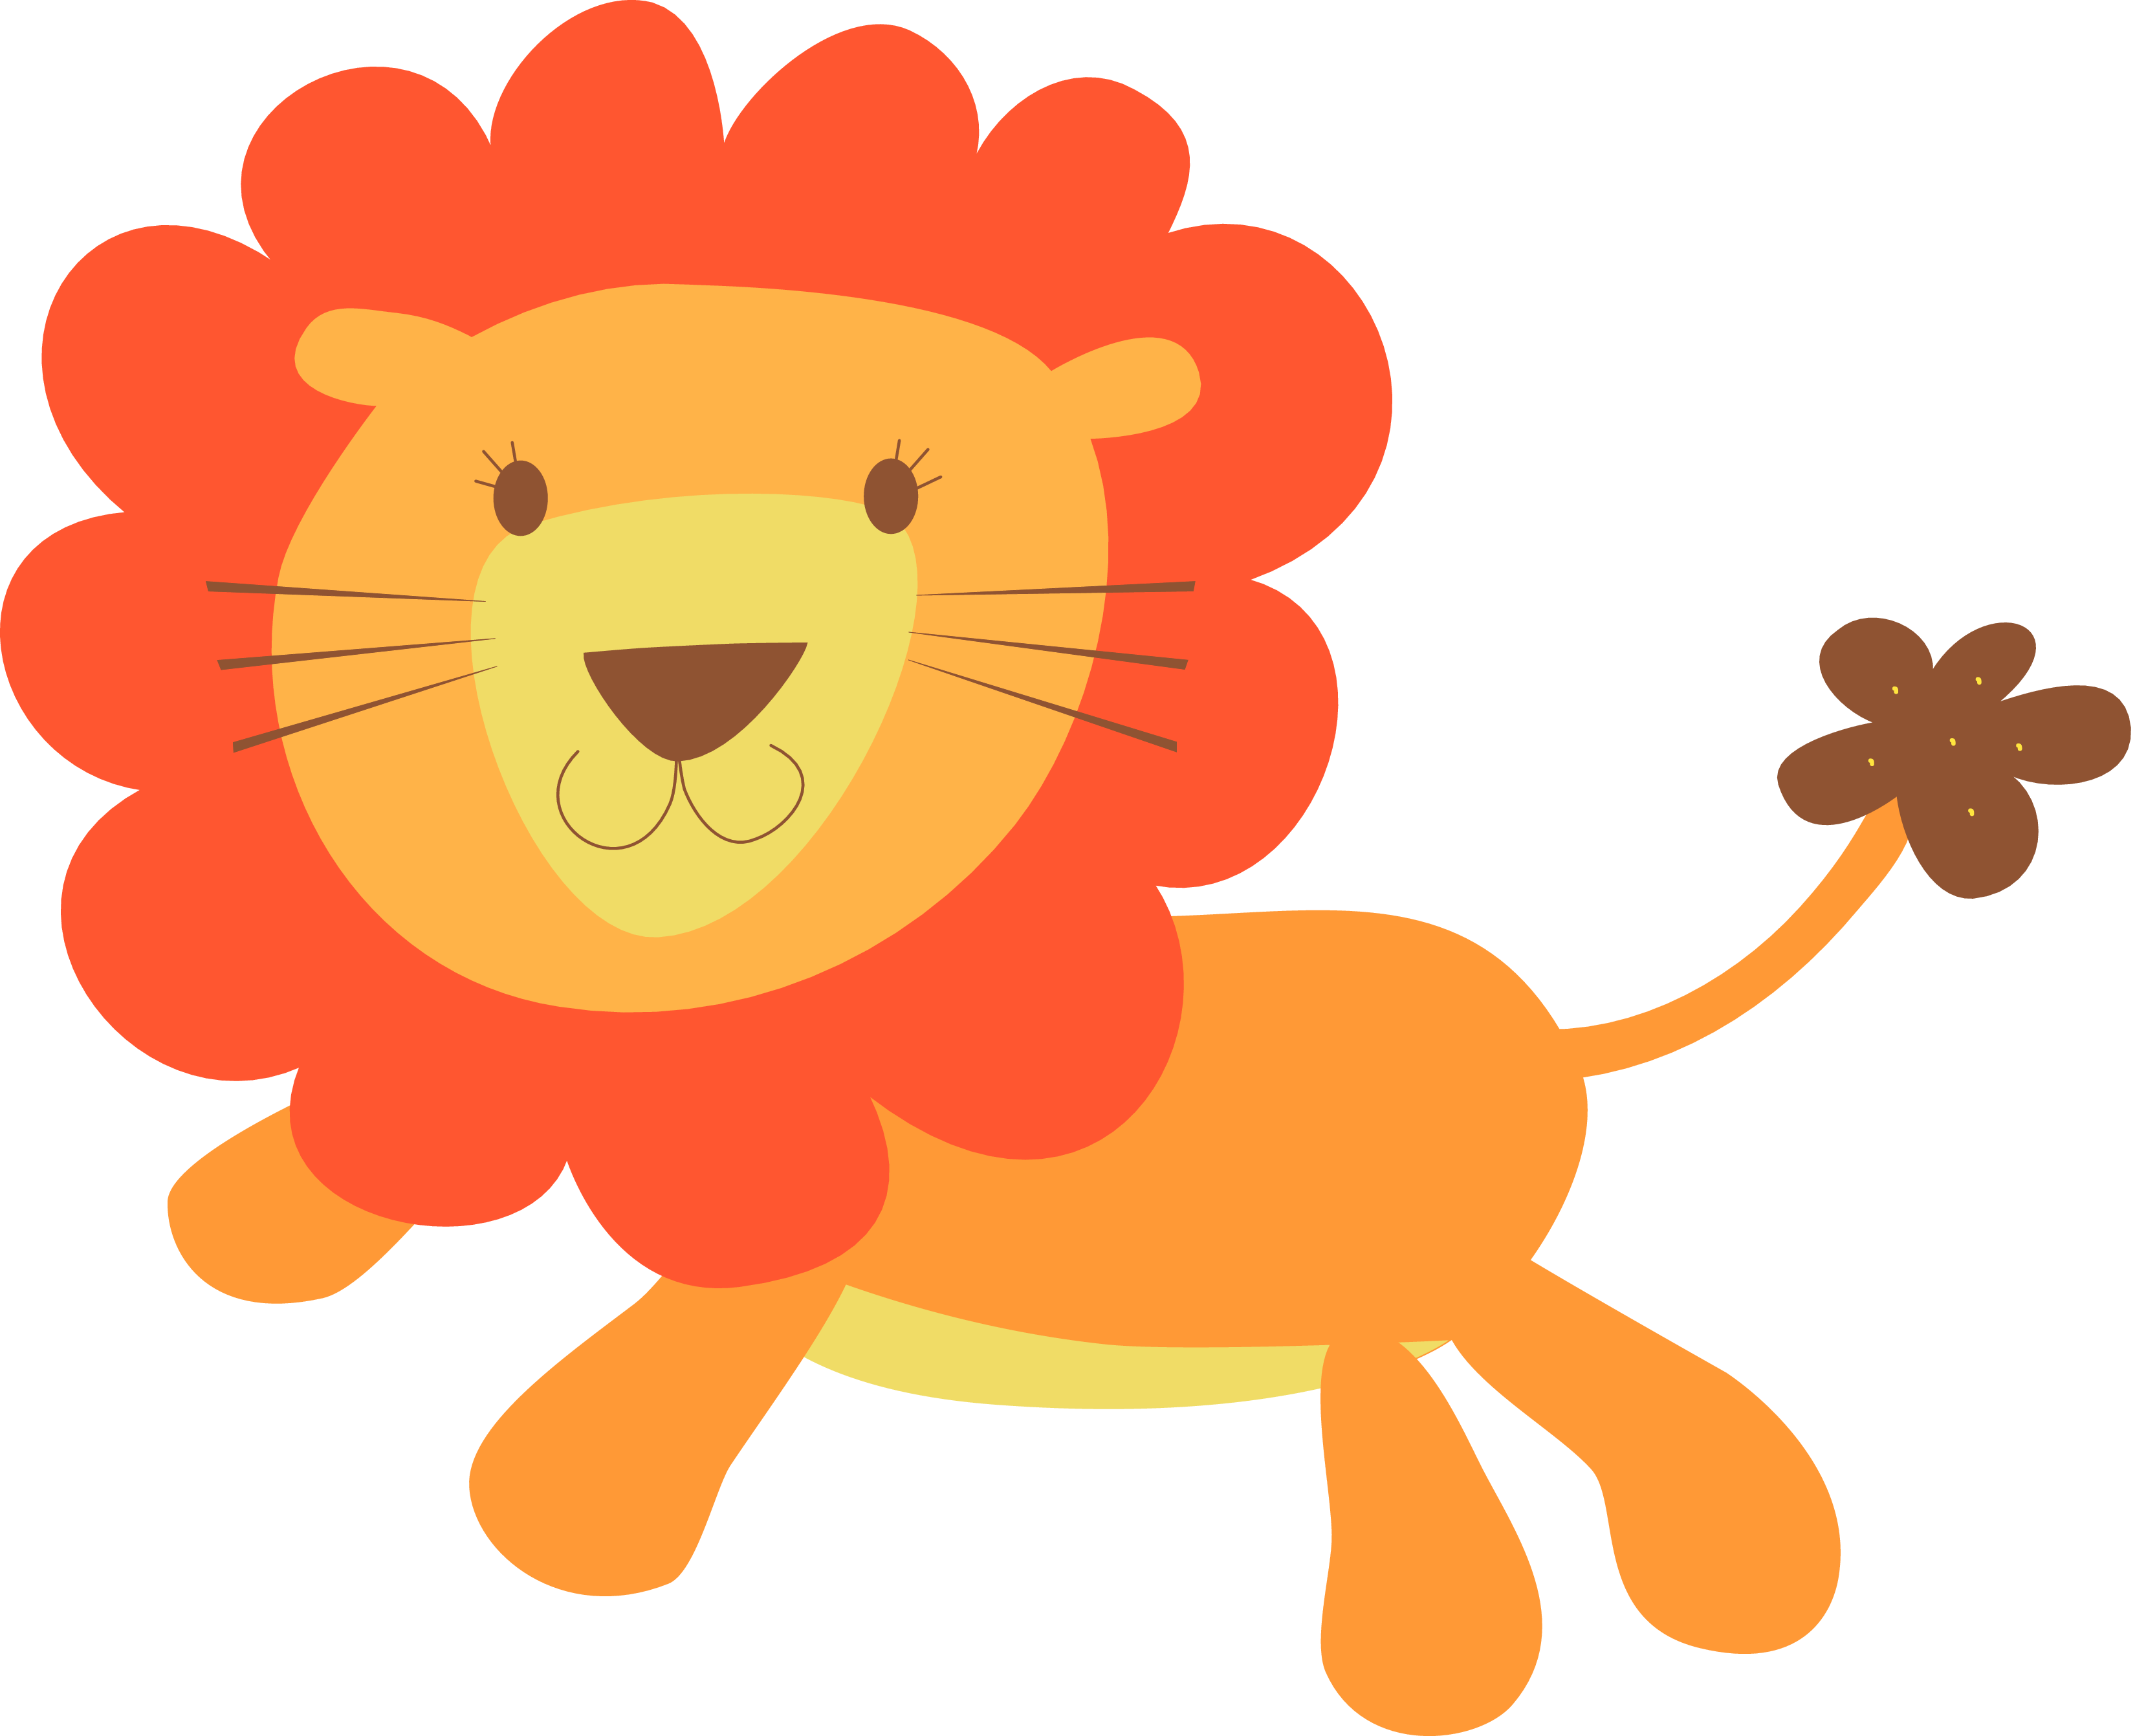 Cartoon Images Of Lions - ClipArt Best